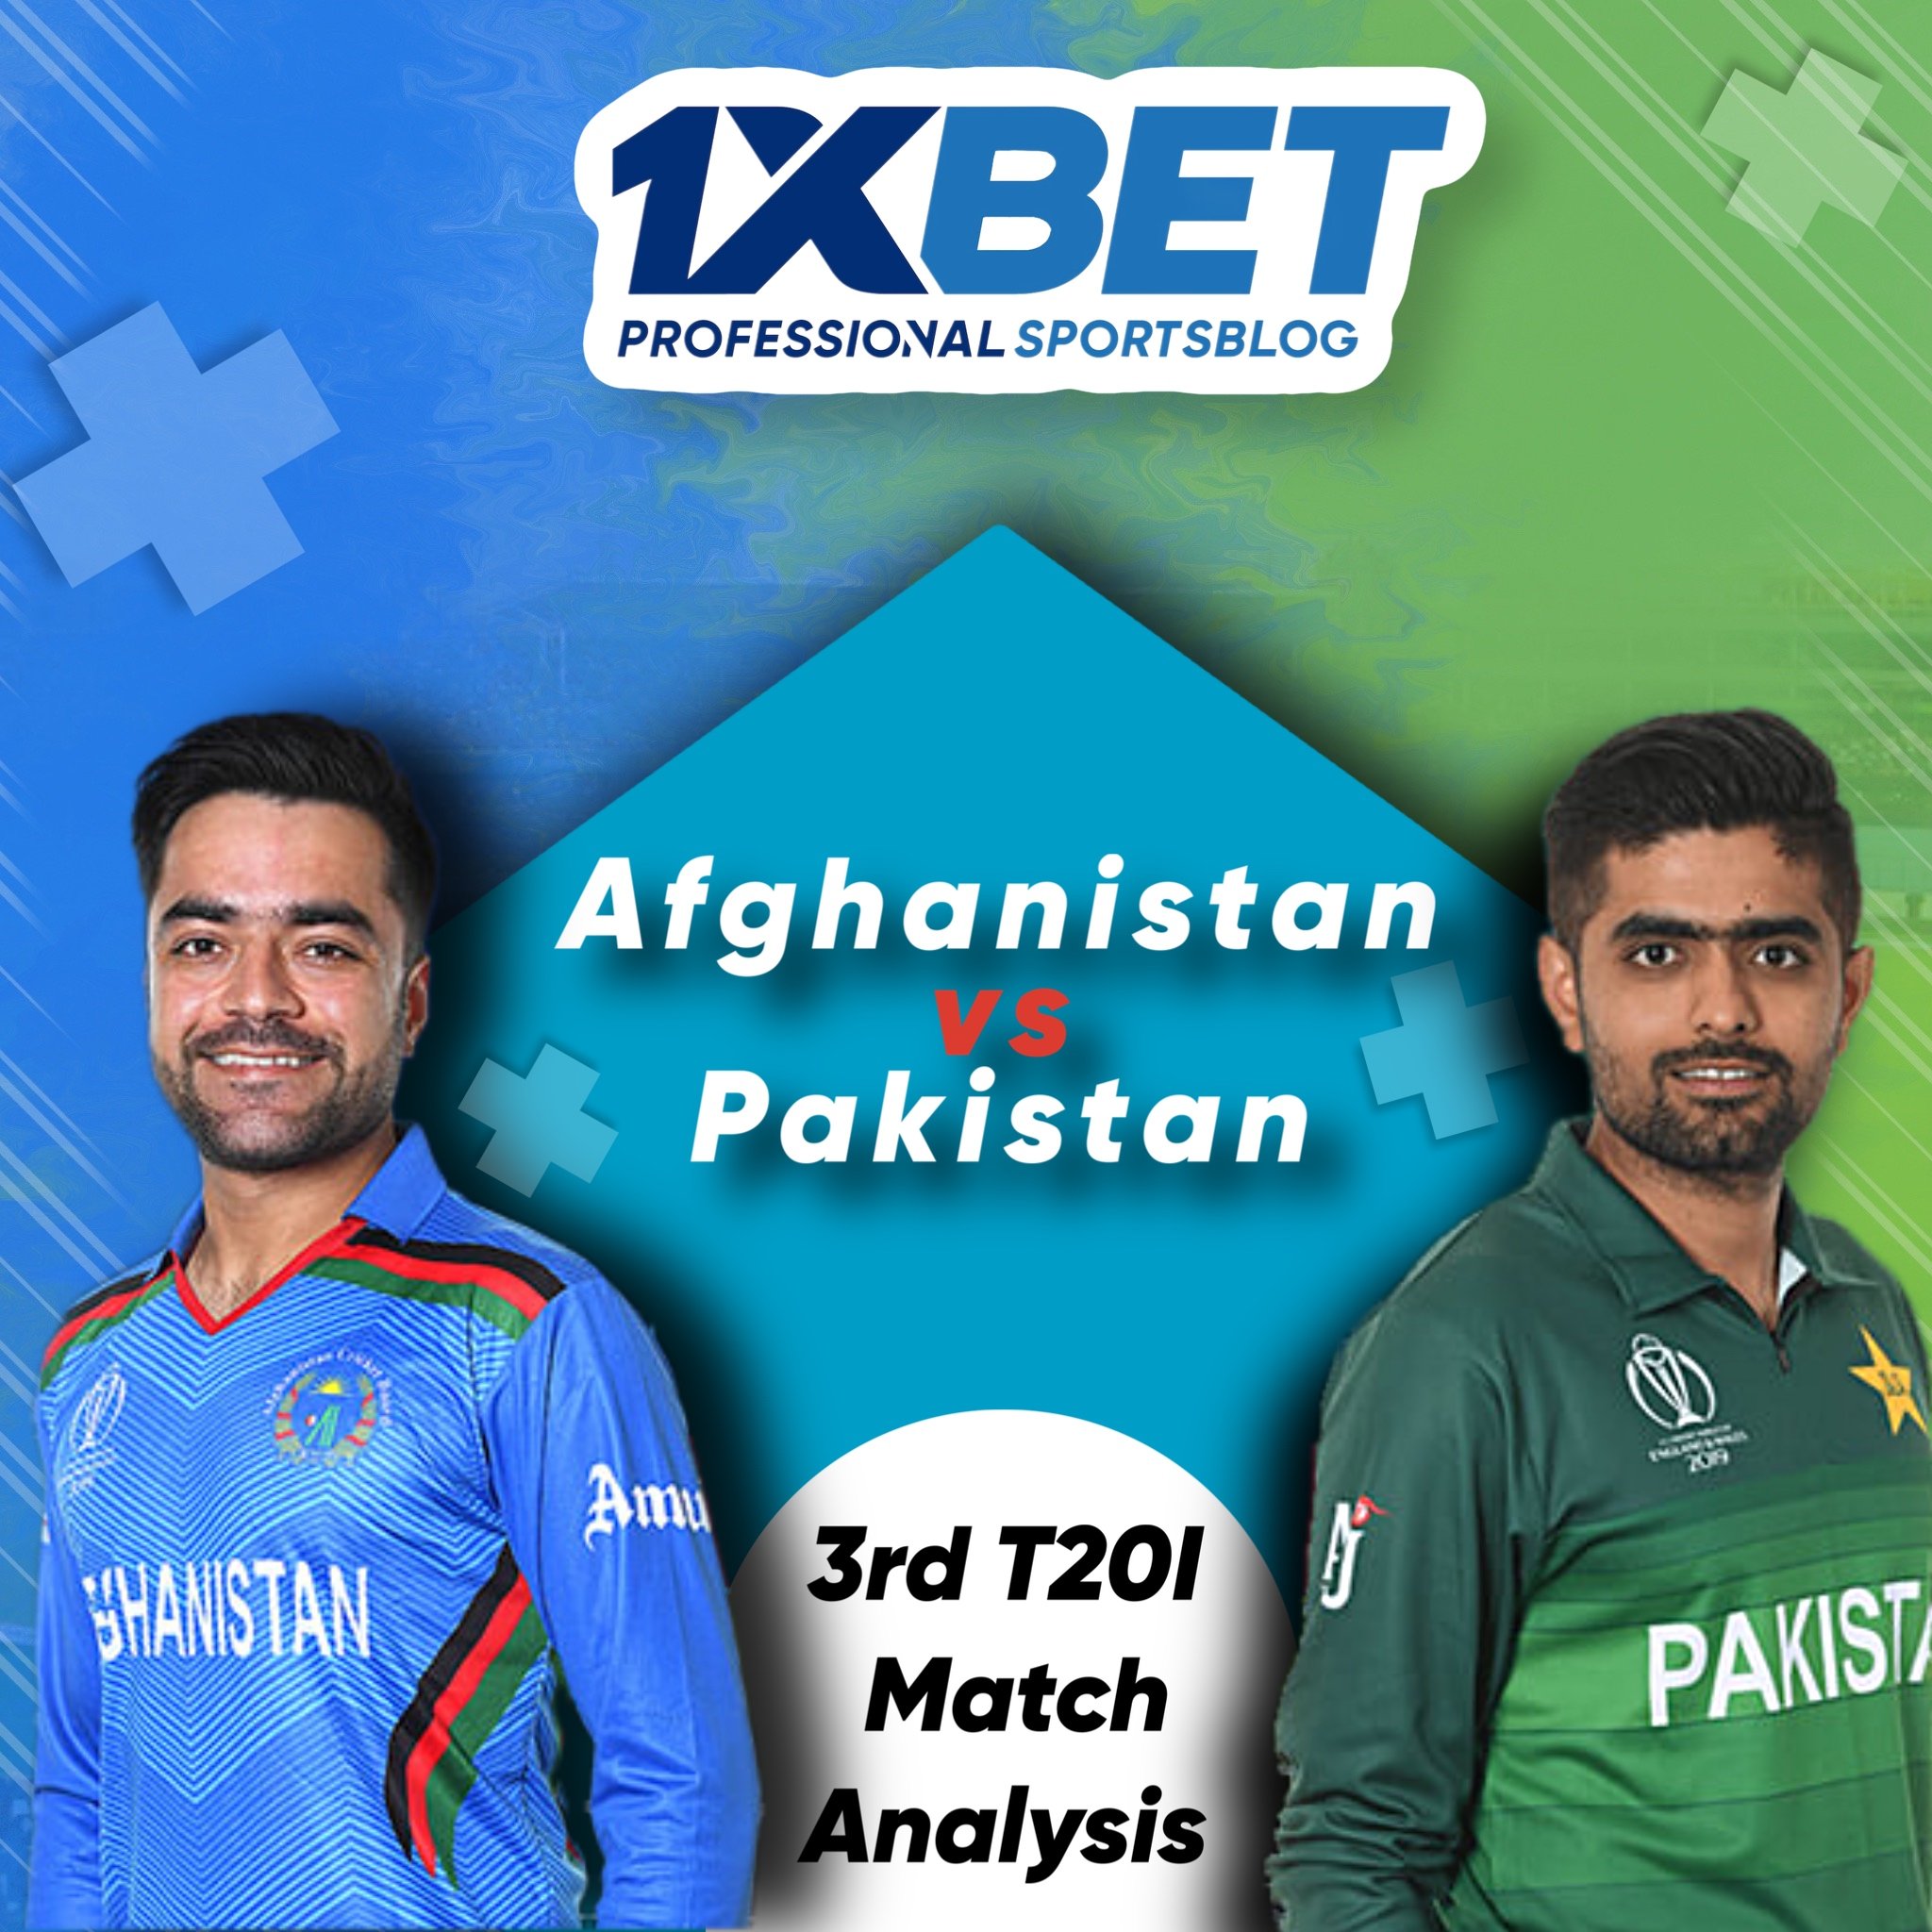 Afghanistan vs Pakistan, 3rd T20I Match Analysis